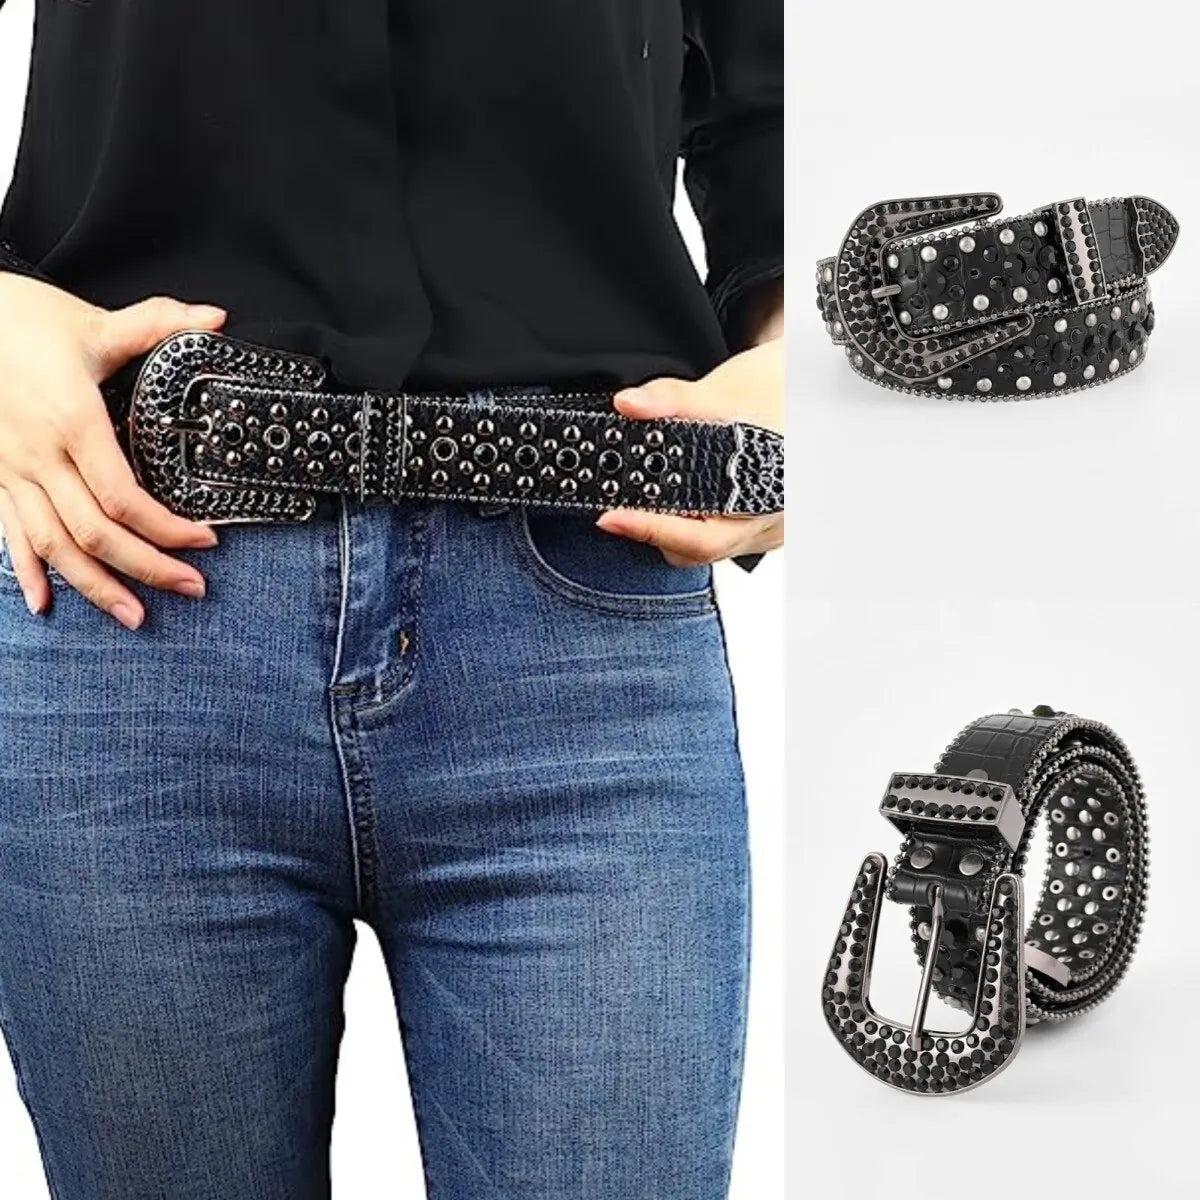 Women's Jeans Rhinestone Large Size Belt Men's Belt Western Denim Shiny Rivet Design Leather HipHop Punk Rock Y2K Style Belt